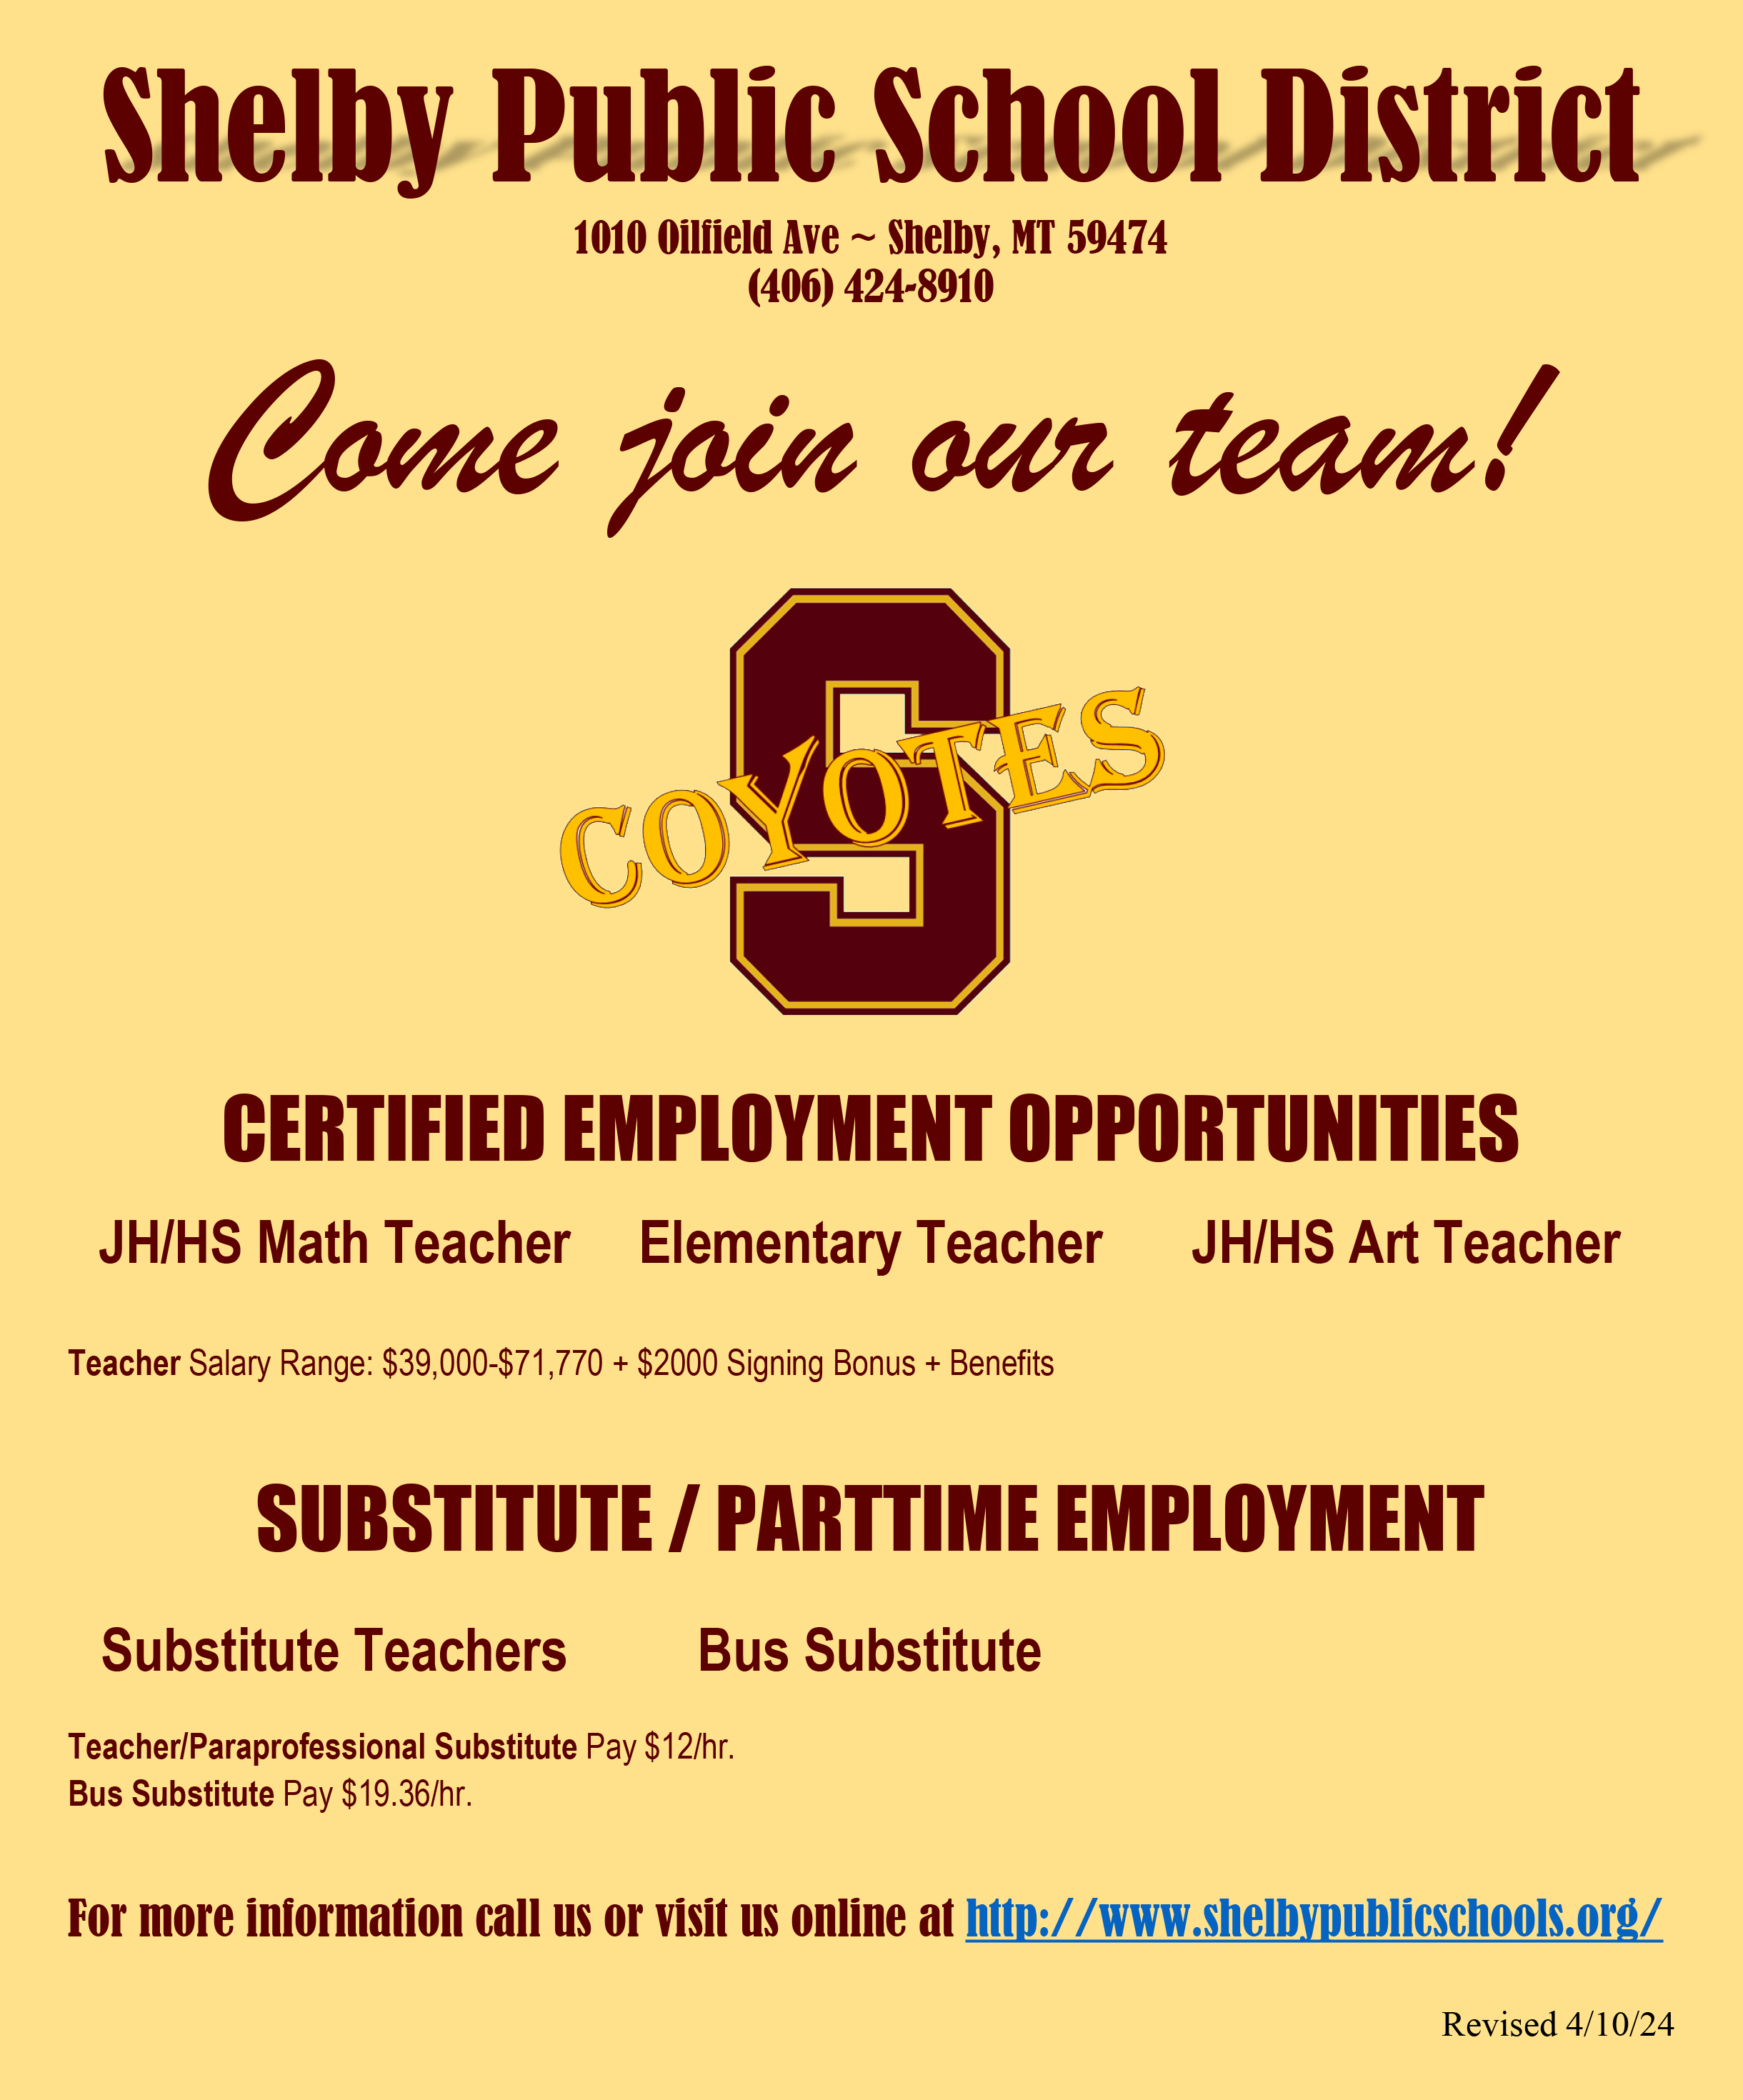 Call School for Job Information (406) 424-8910